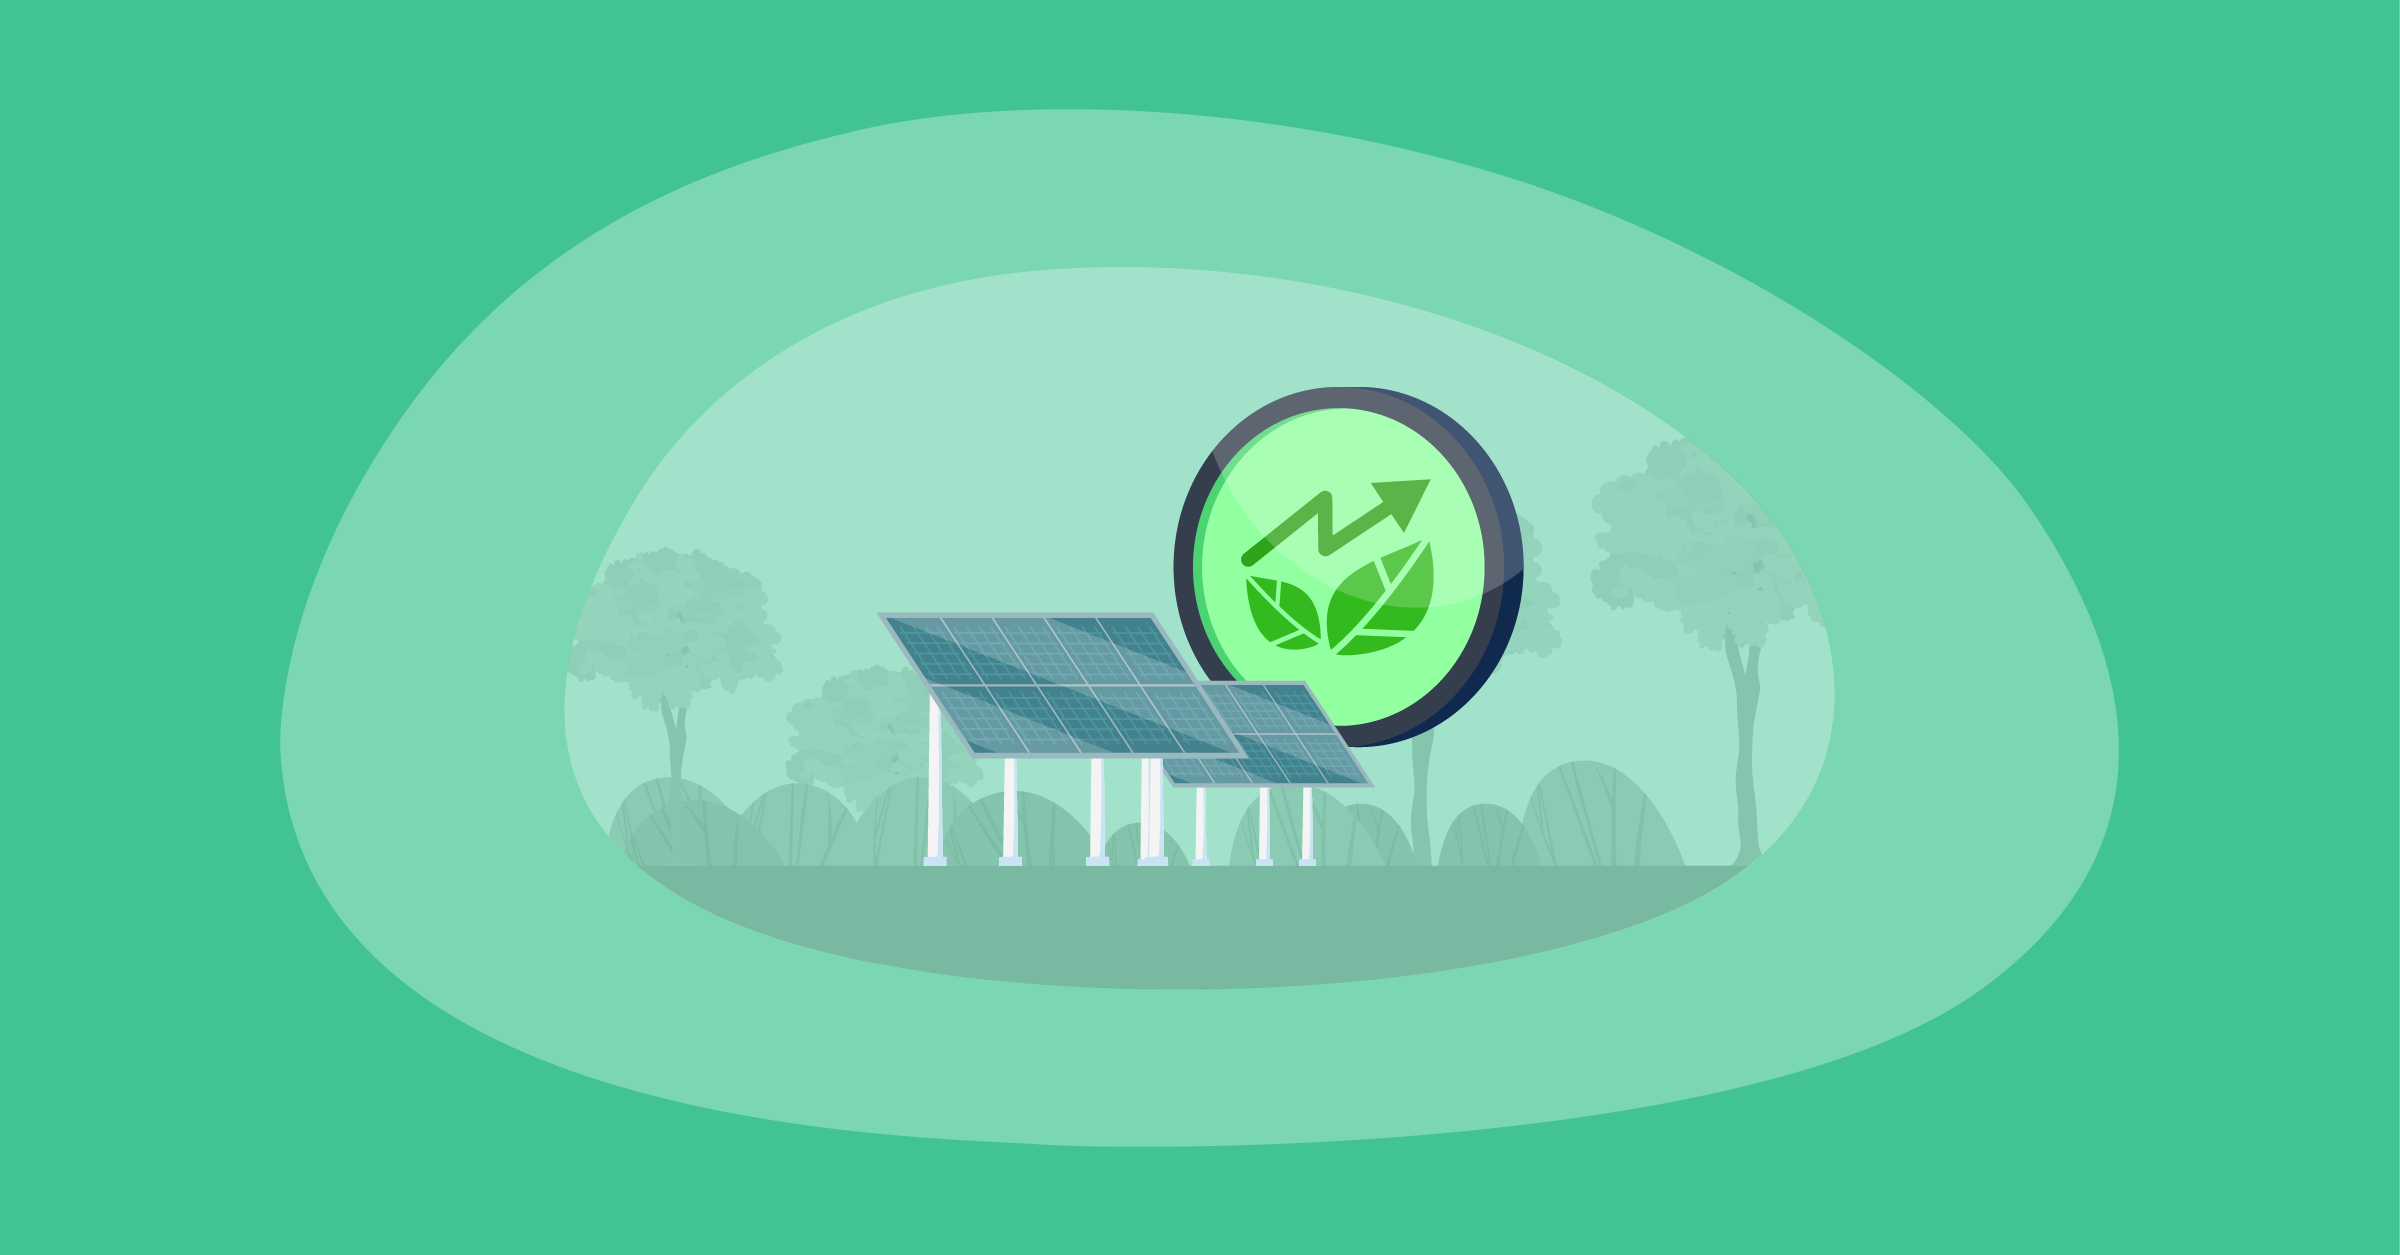 Illustration of the main environmental benefits of solar energy